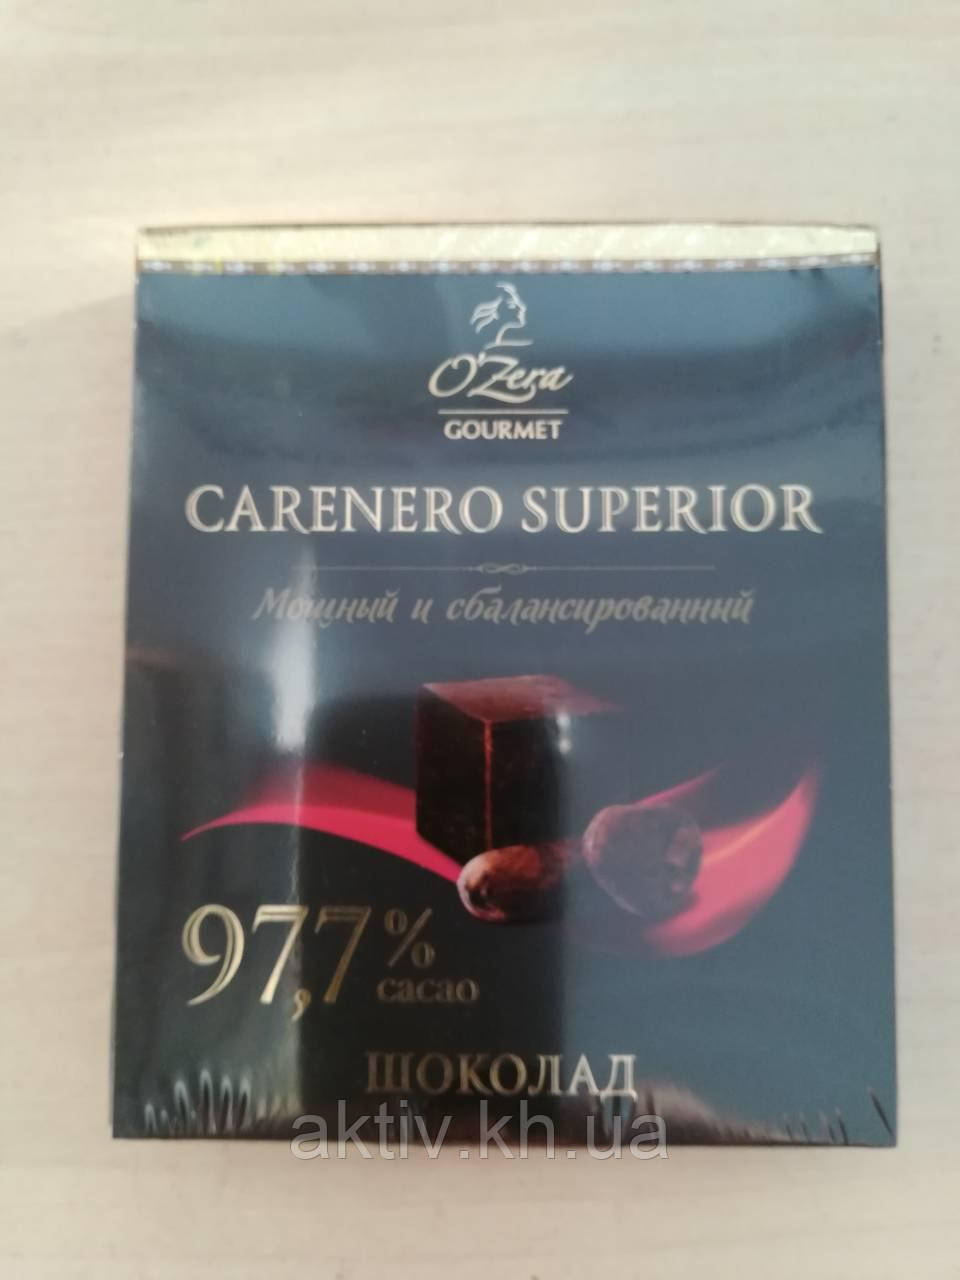 Шоколад Ozera Caranero 97,7% Superior 90 гр